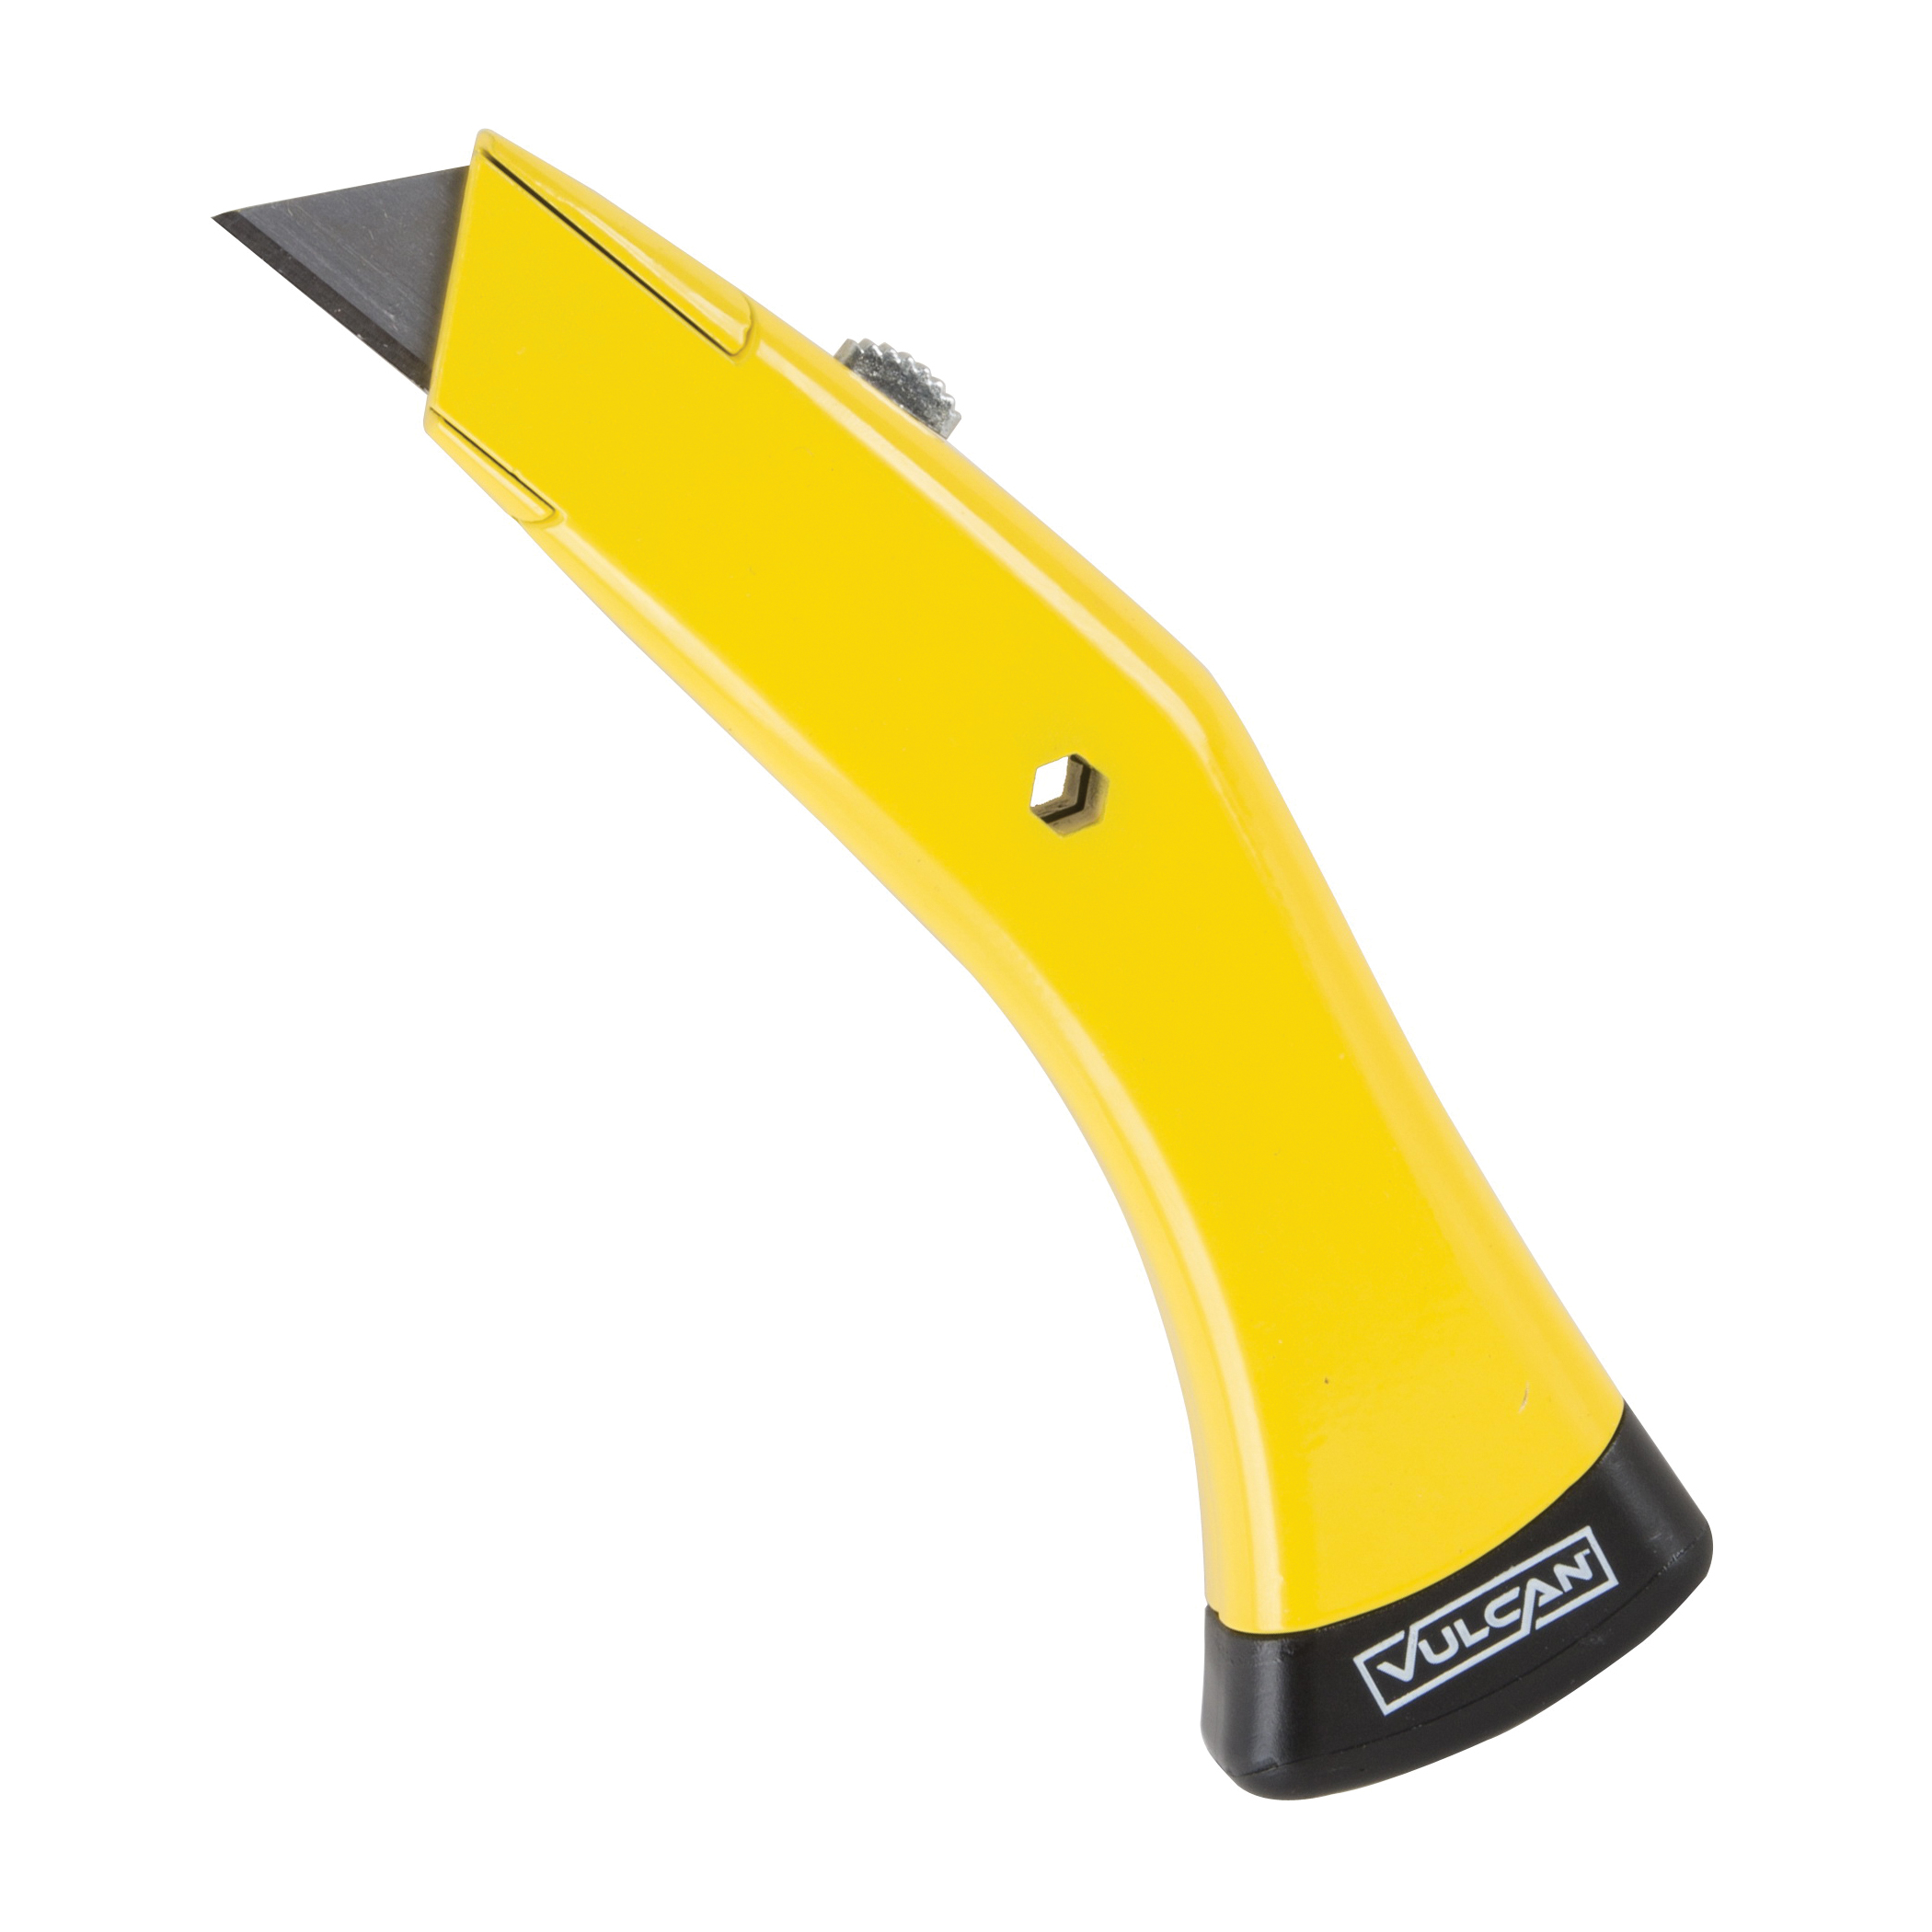 Vulcan JL-KF0008 Utility Knife, 2-1/4 in L Blade, 3/4 in W Blade, Zinc Alloy Handle, Black/Yellow Handle